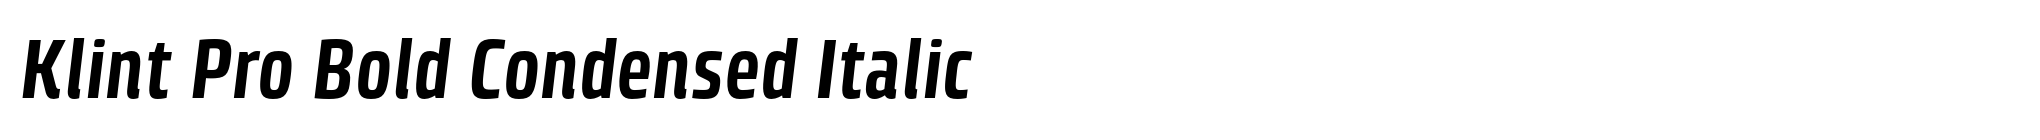 Klint Pro Bold Condensed Italic image